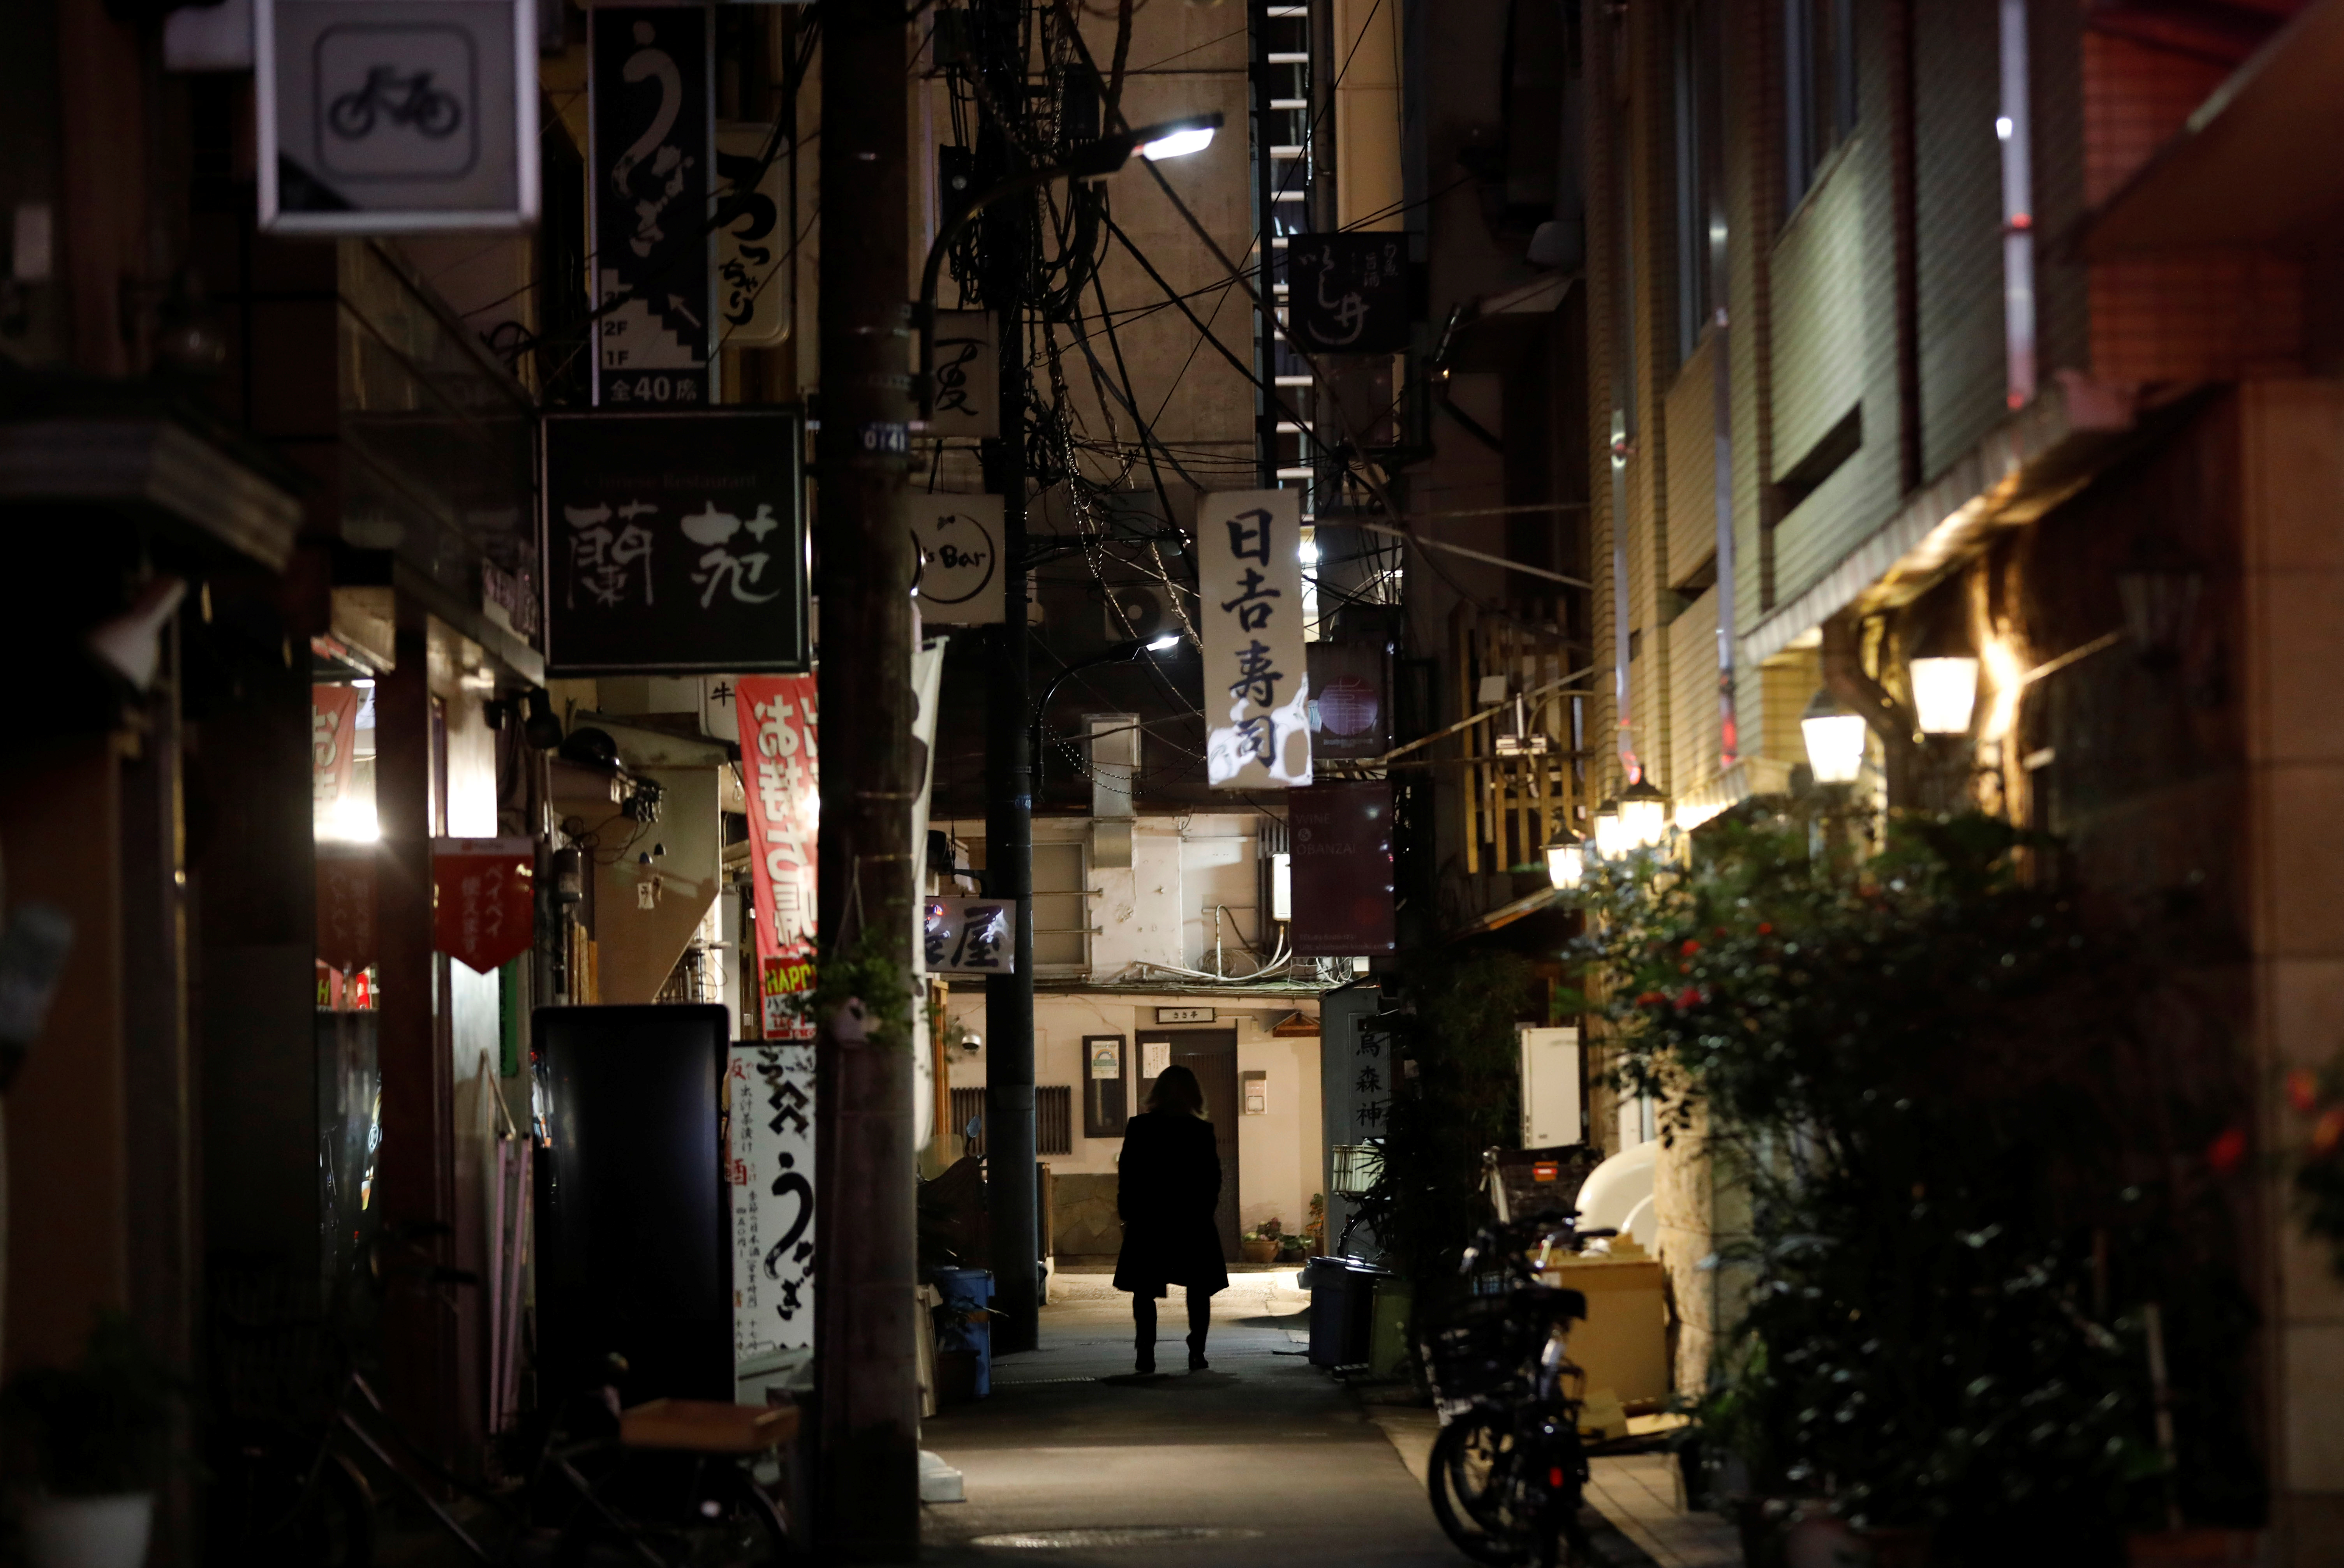 Restaurants found flouting Japan's COVID-19 emergency decree in Tokyo